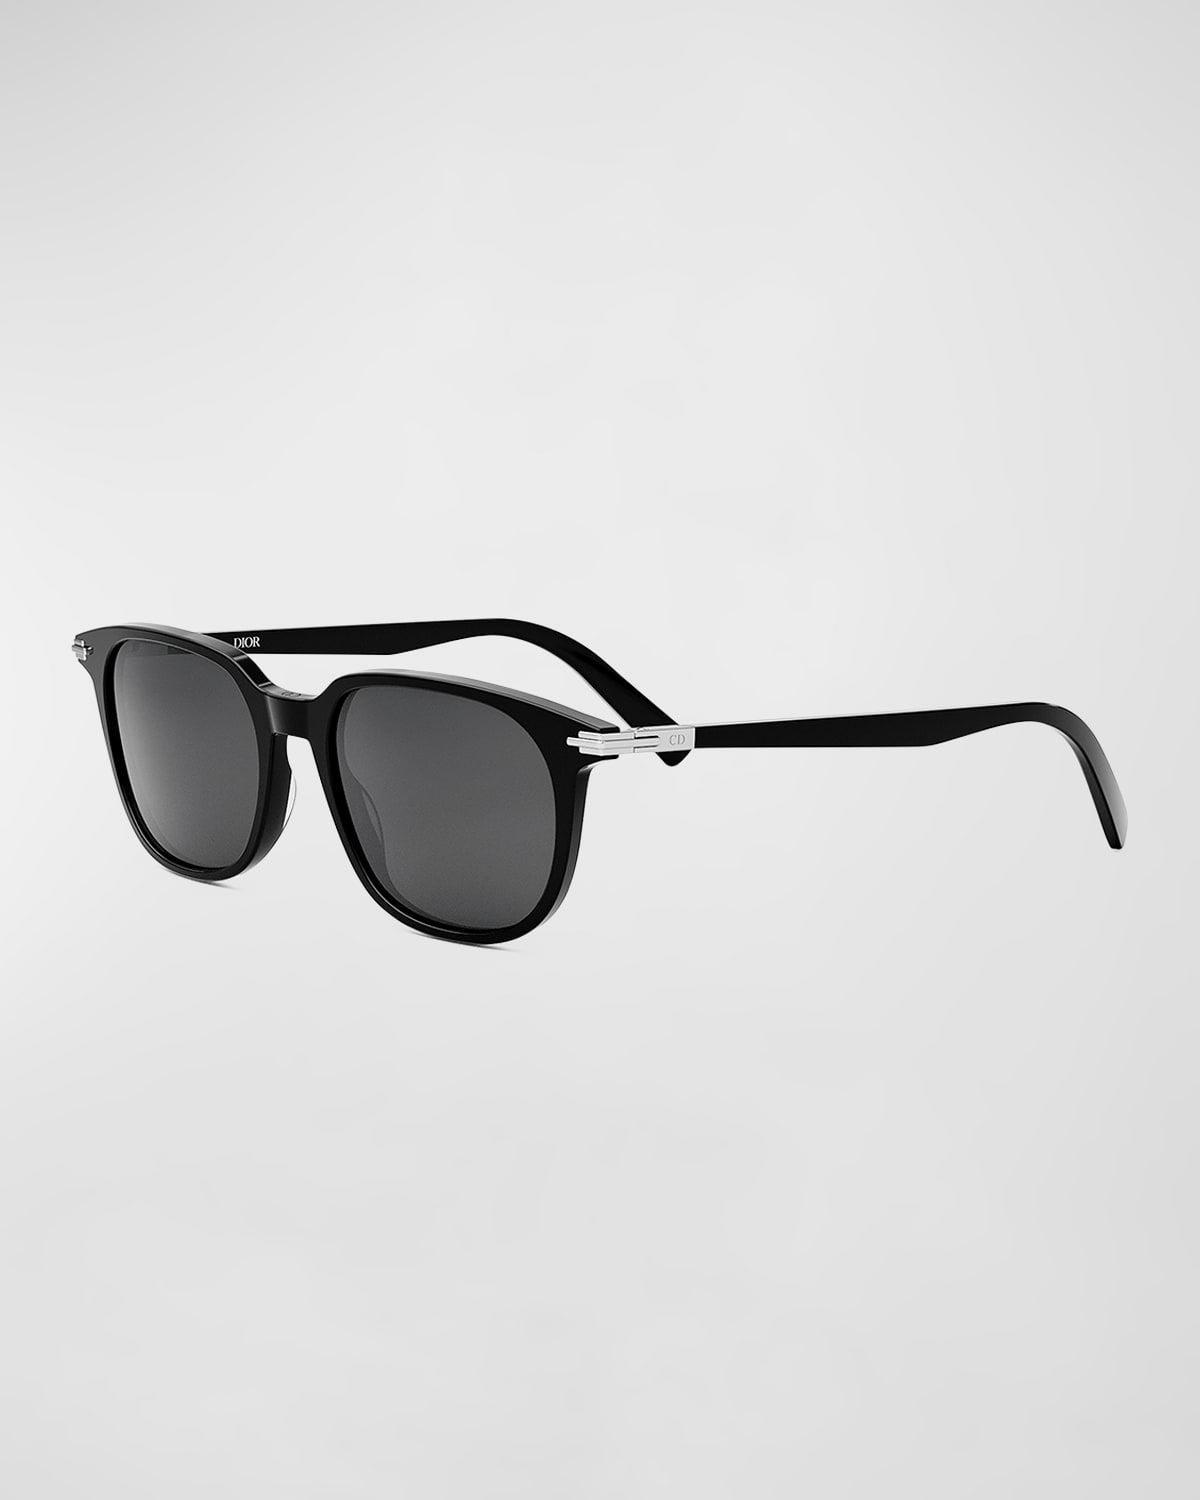 Dior Blacksuit S12i Sunglasses In Sblksmk